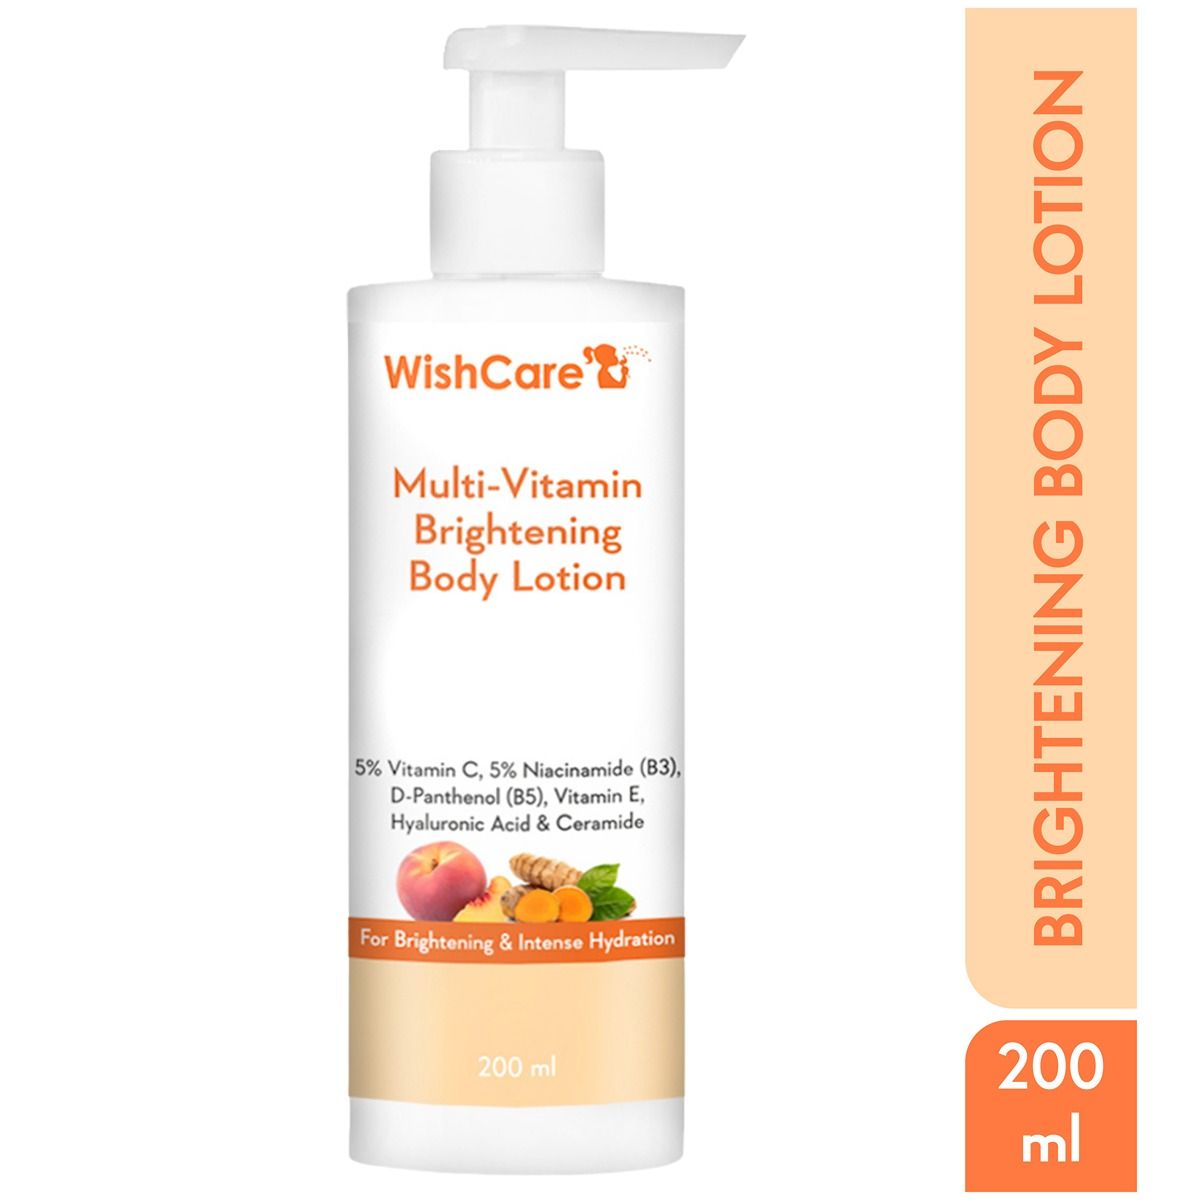 Buy WishCare Multi-Vitamin Brightening Body Lotion - 5% Vitamin C,5% Niacinamide(B3), D-Panthenol(B5), Vitamin-E, Hyaluronic Acid & Ceramide - Purplle